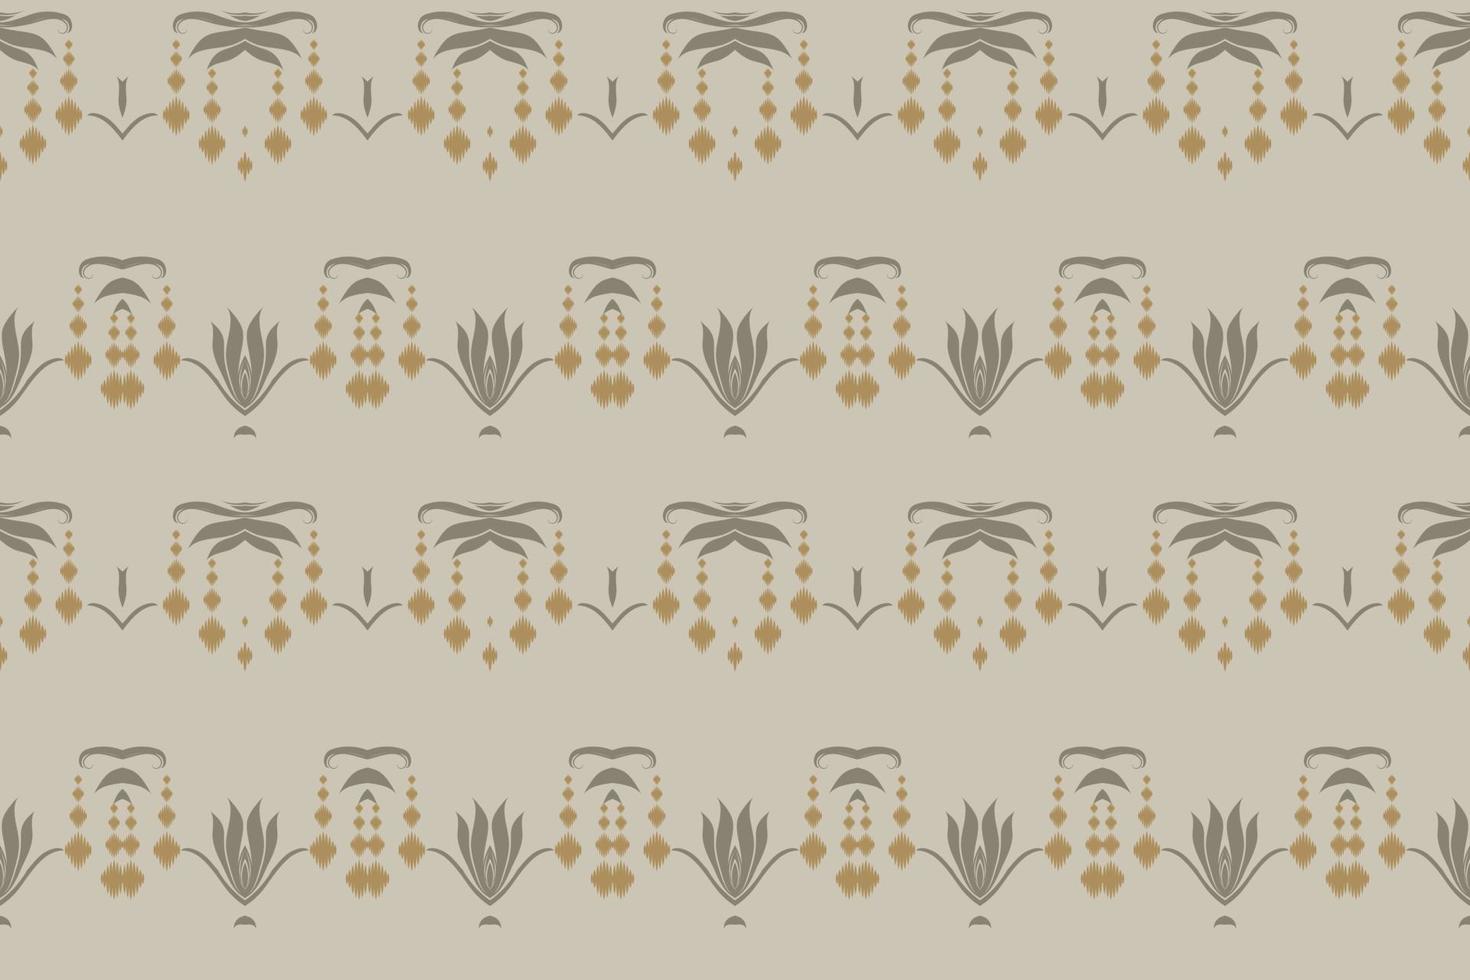 ikkat o ikat flores batik textil patrón sin costuras diseño vectorial digital para imprimir saree kurti borneo borde de tela símbolos de pincel muestras de algodón vector